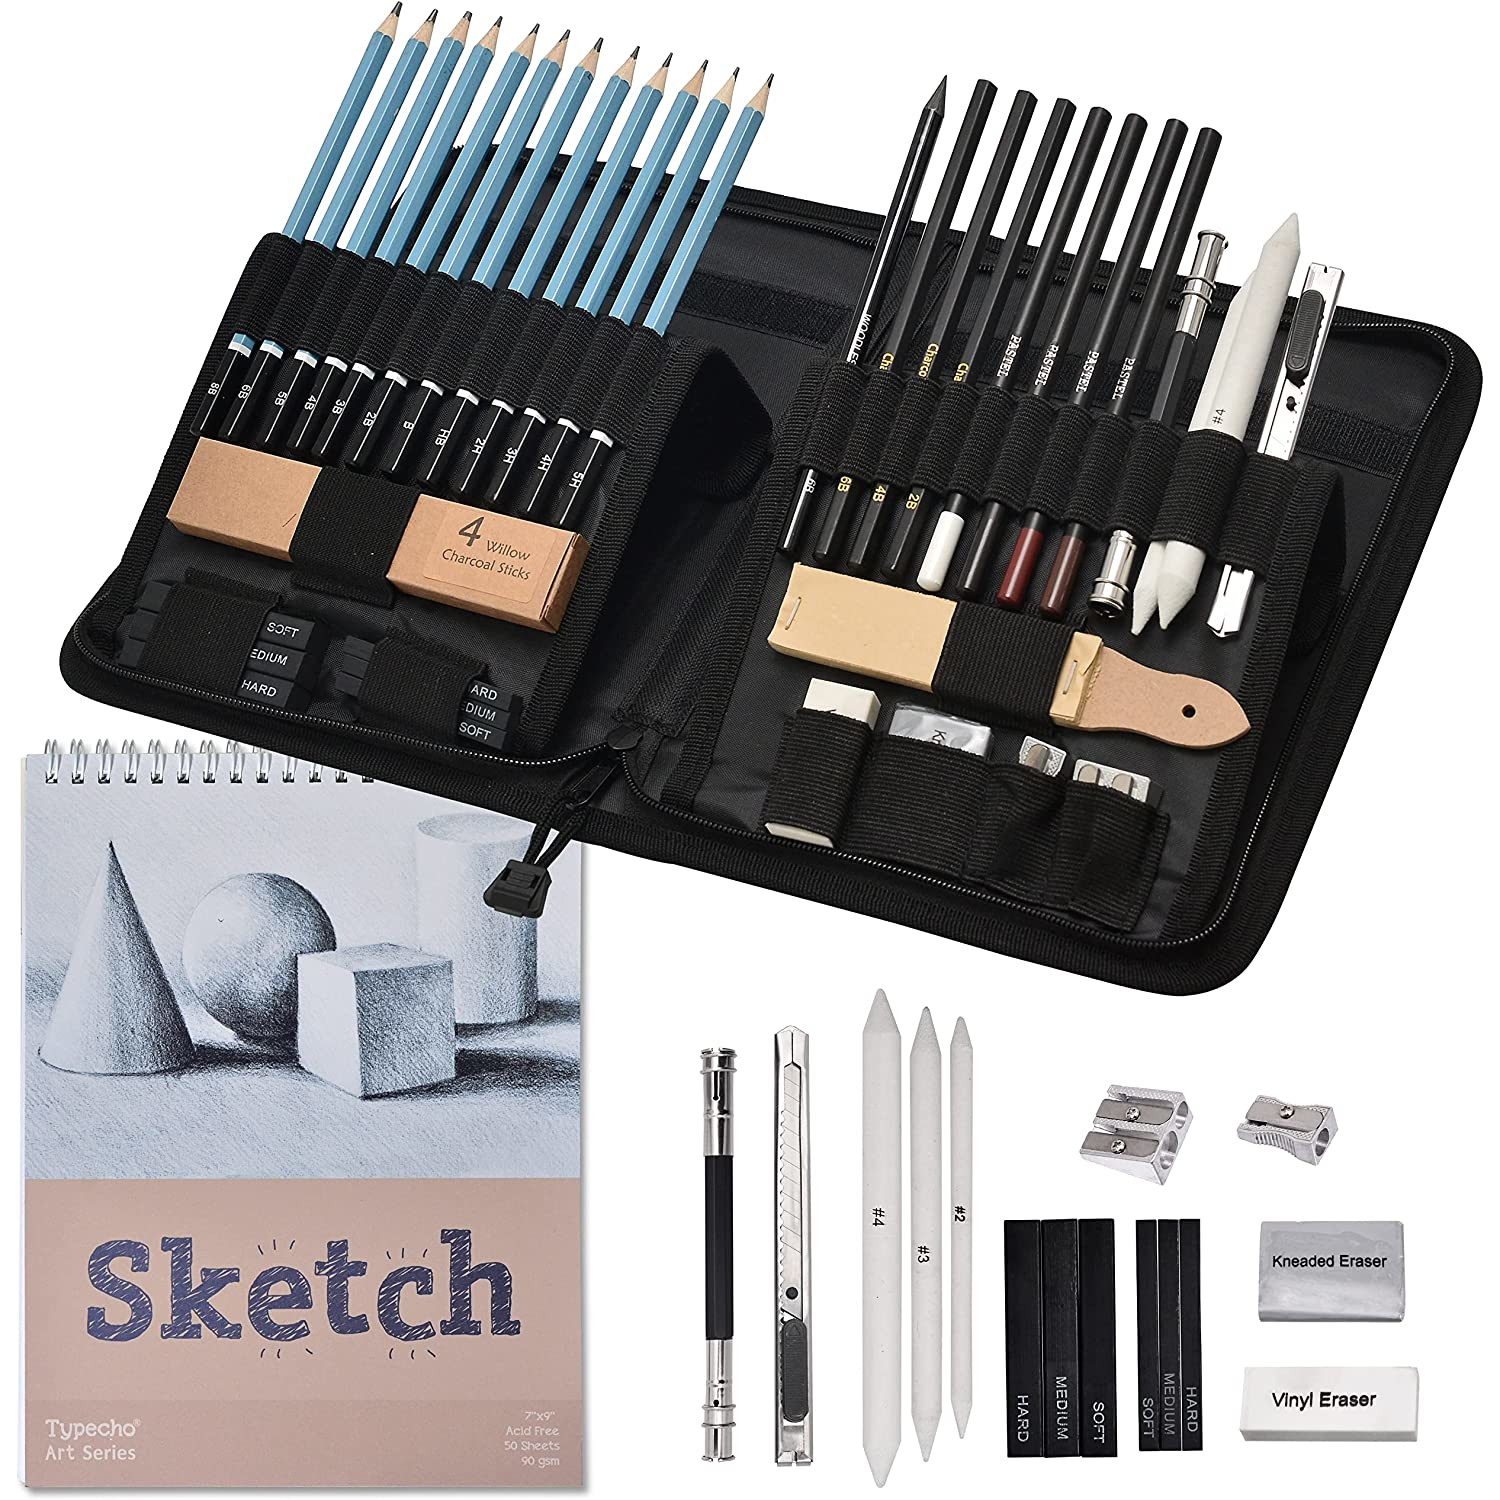 Typecho Sketching Drawing Pencil Set,42pcs Professional Charcoal